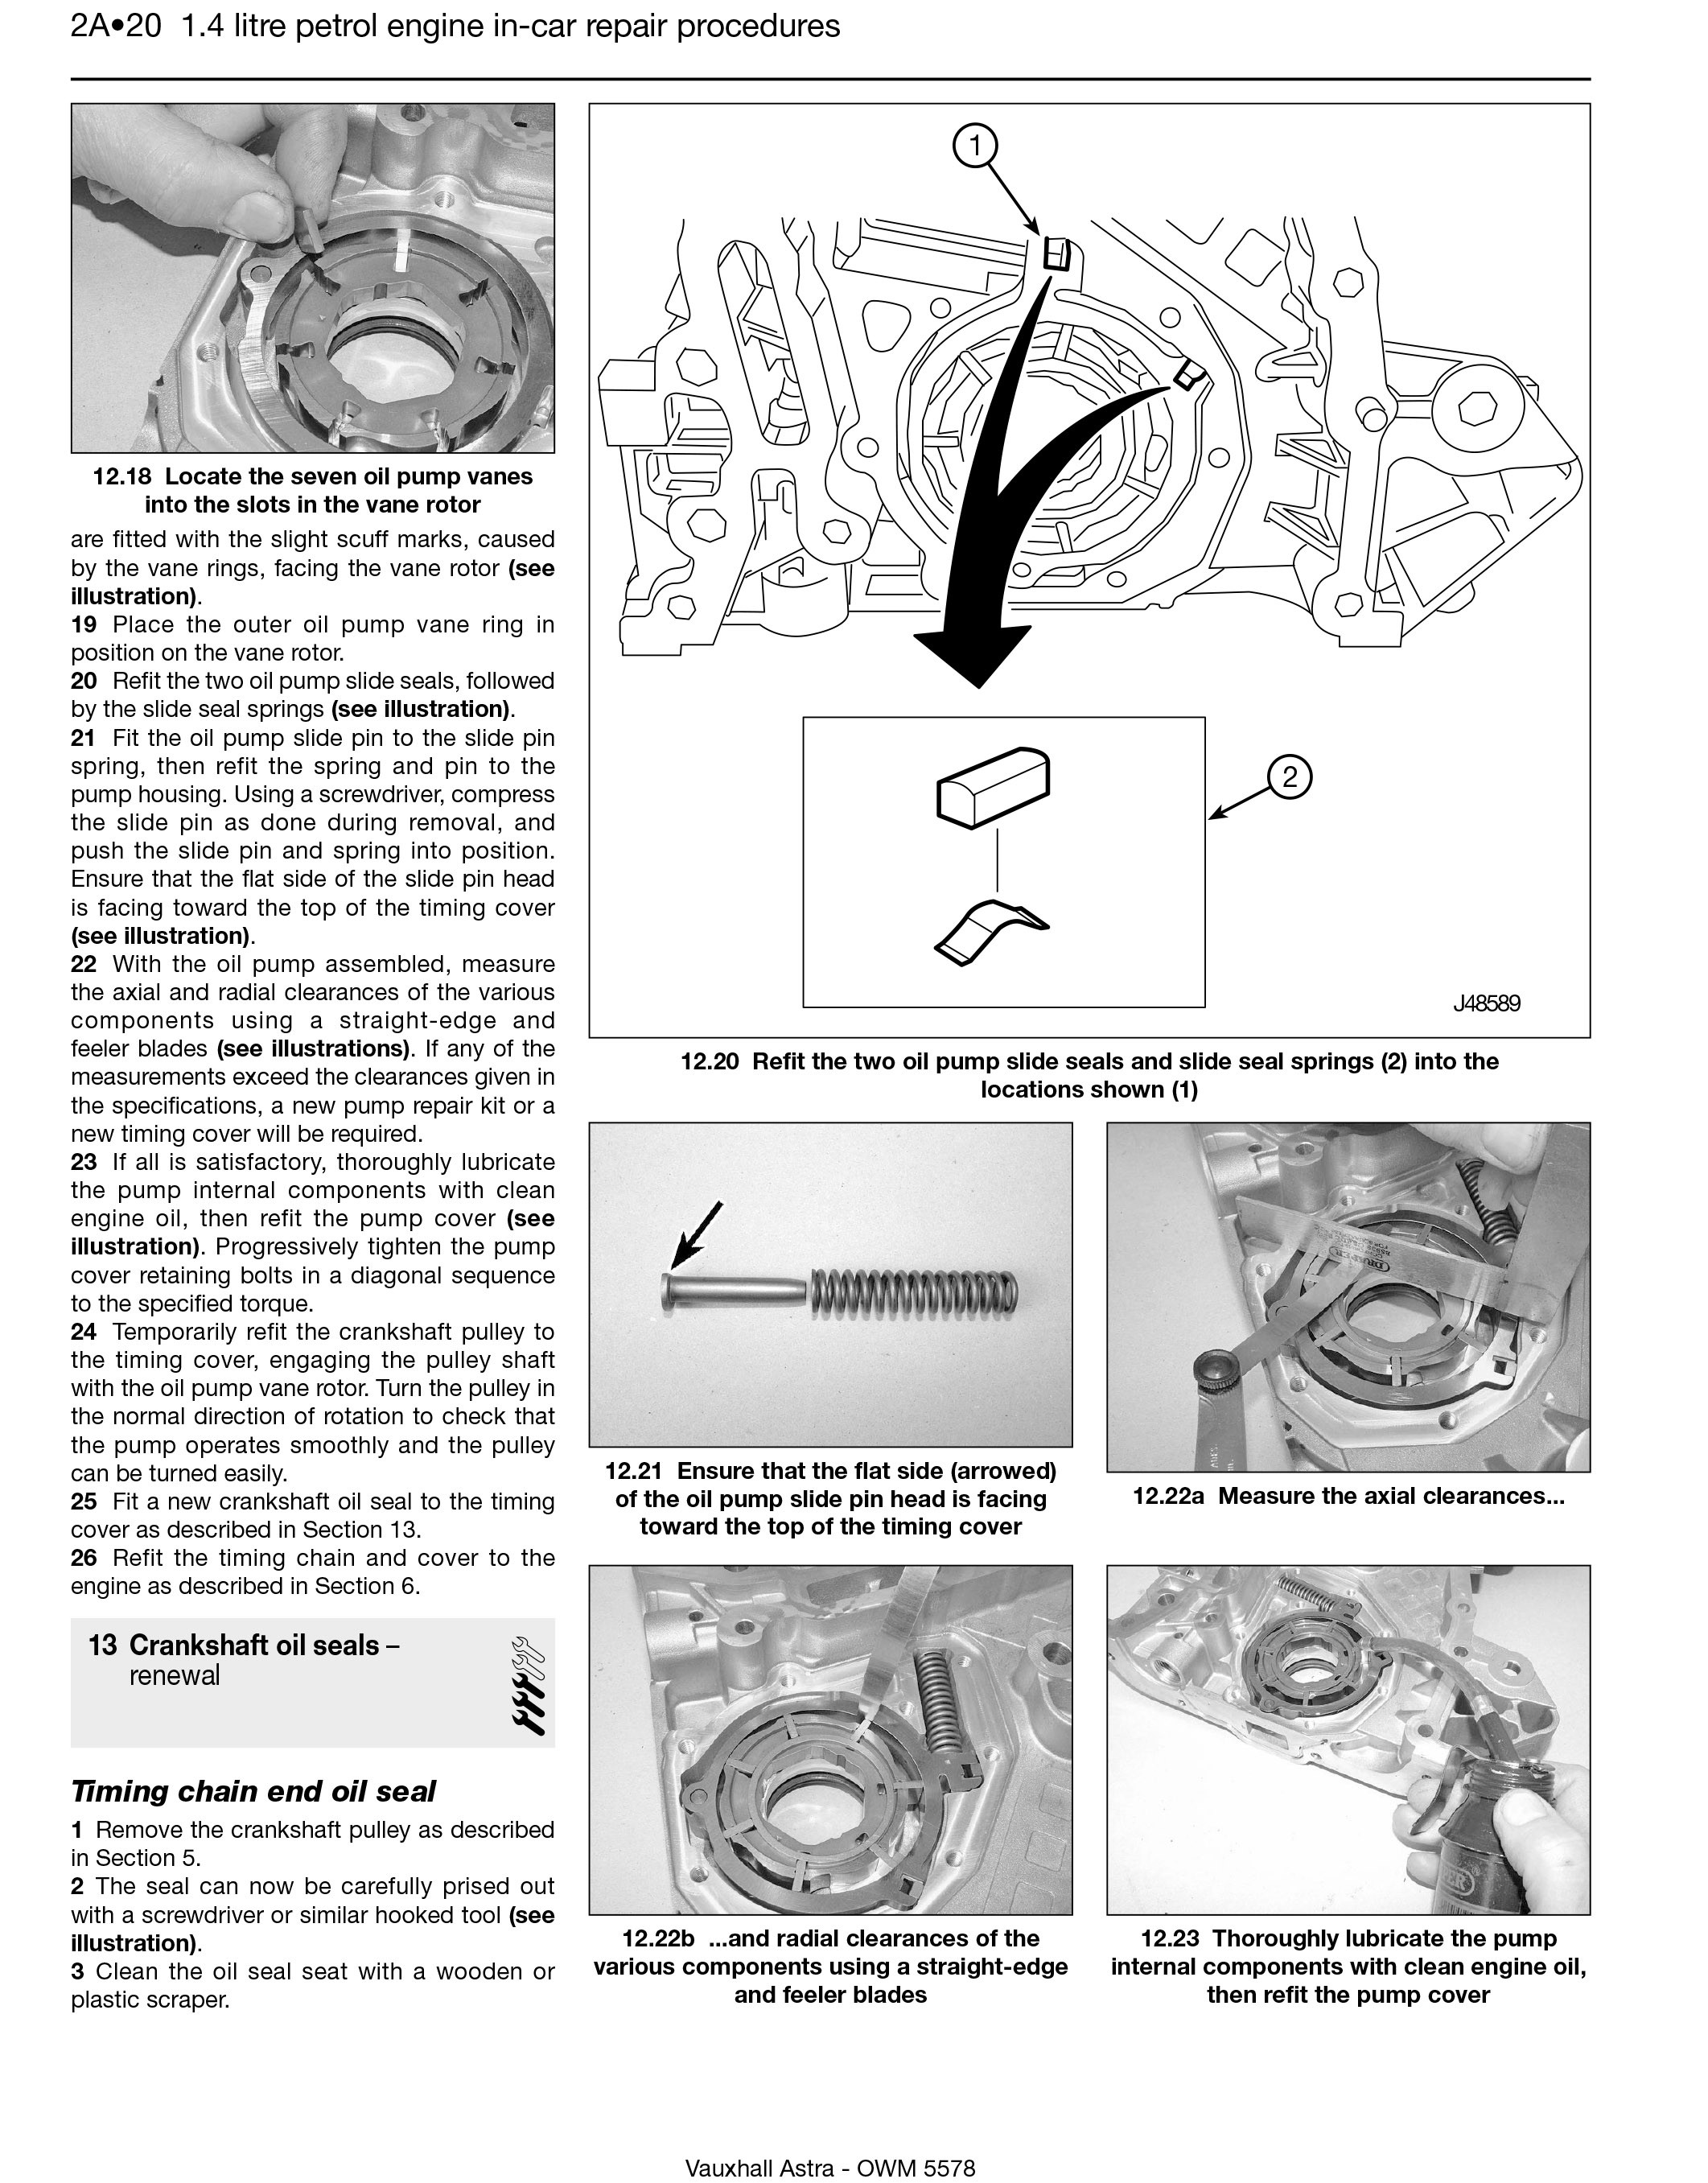 Petrol Engine Diagram Vauxhall Opel astra Dec 09 13 Haynes Repair Manual Of Petrol Engine Diagram